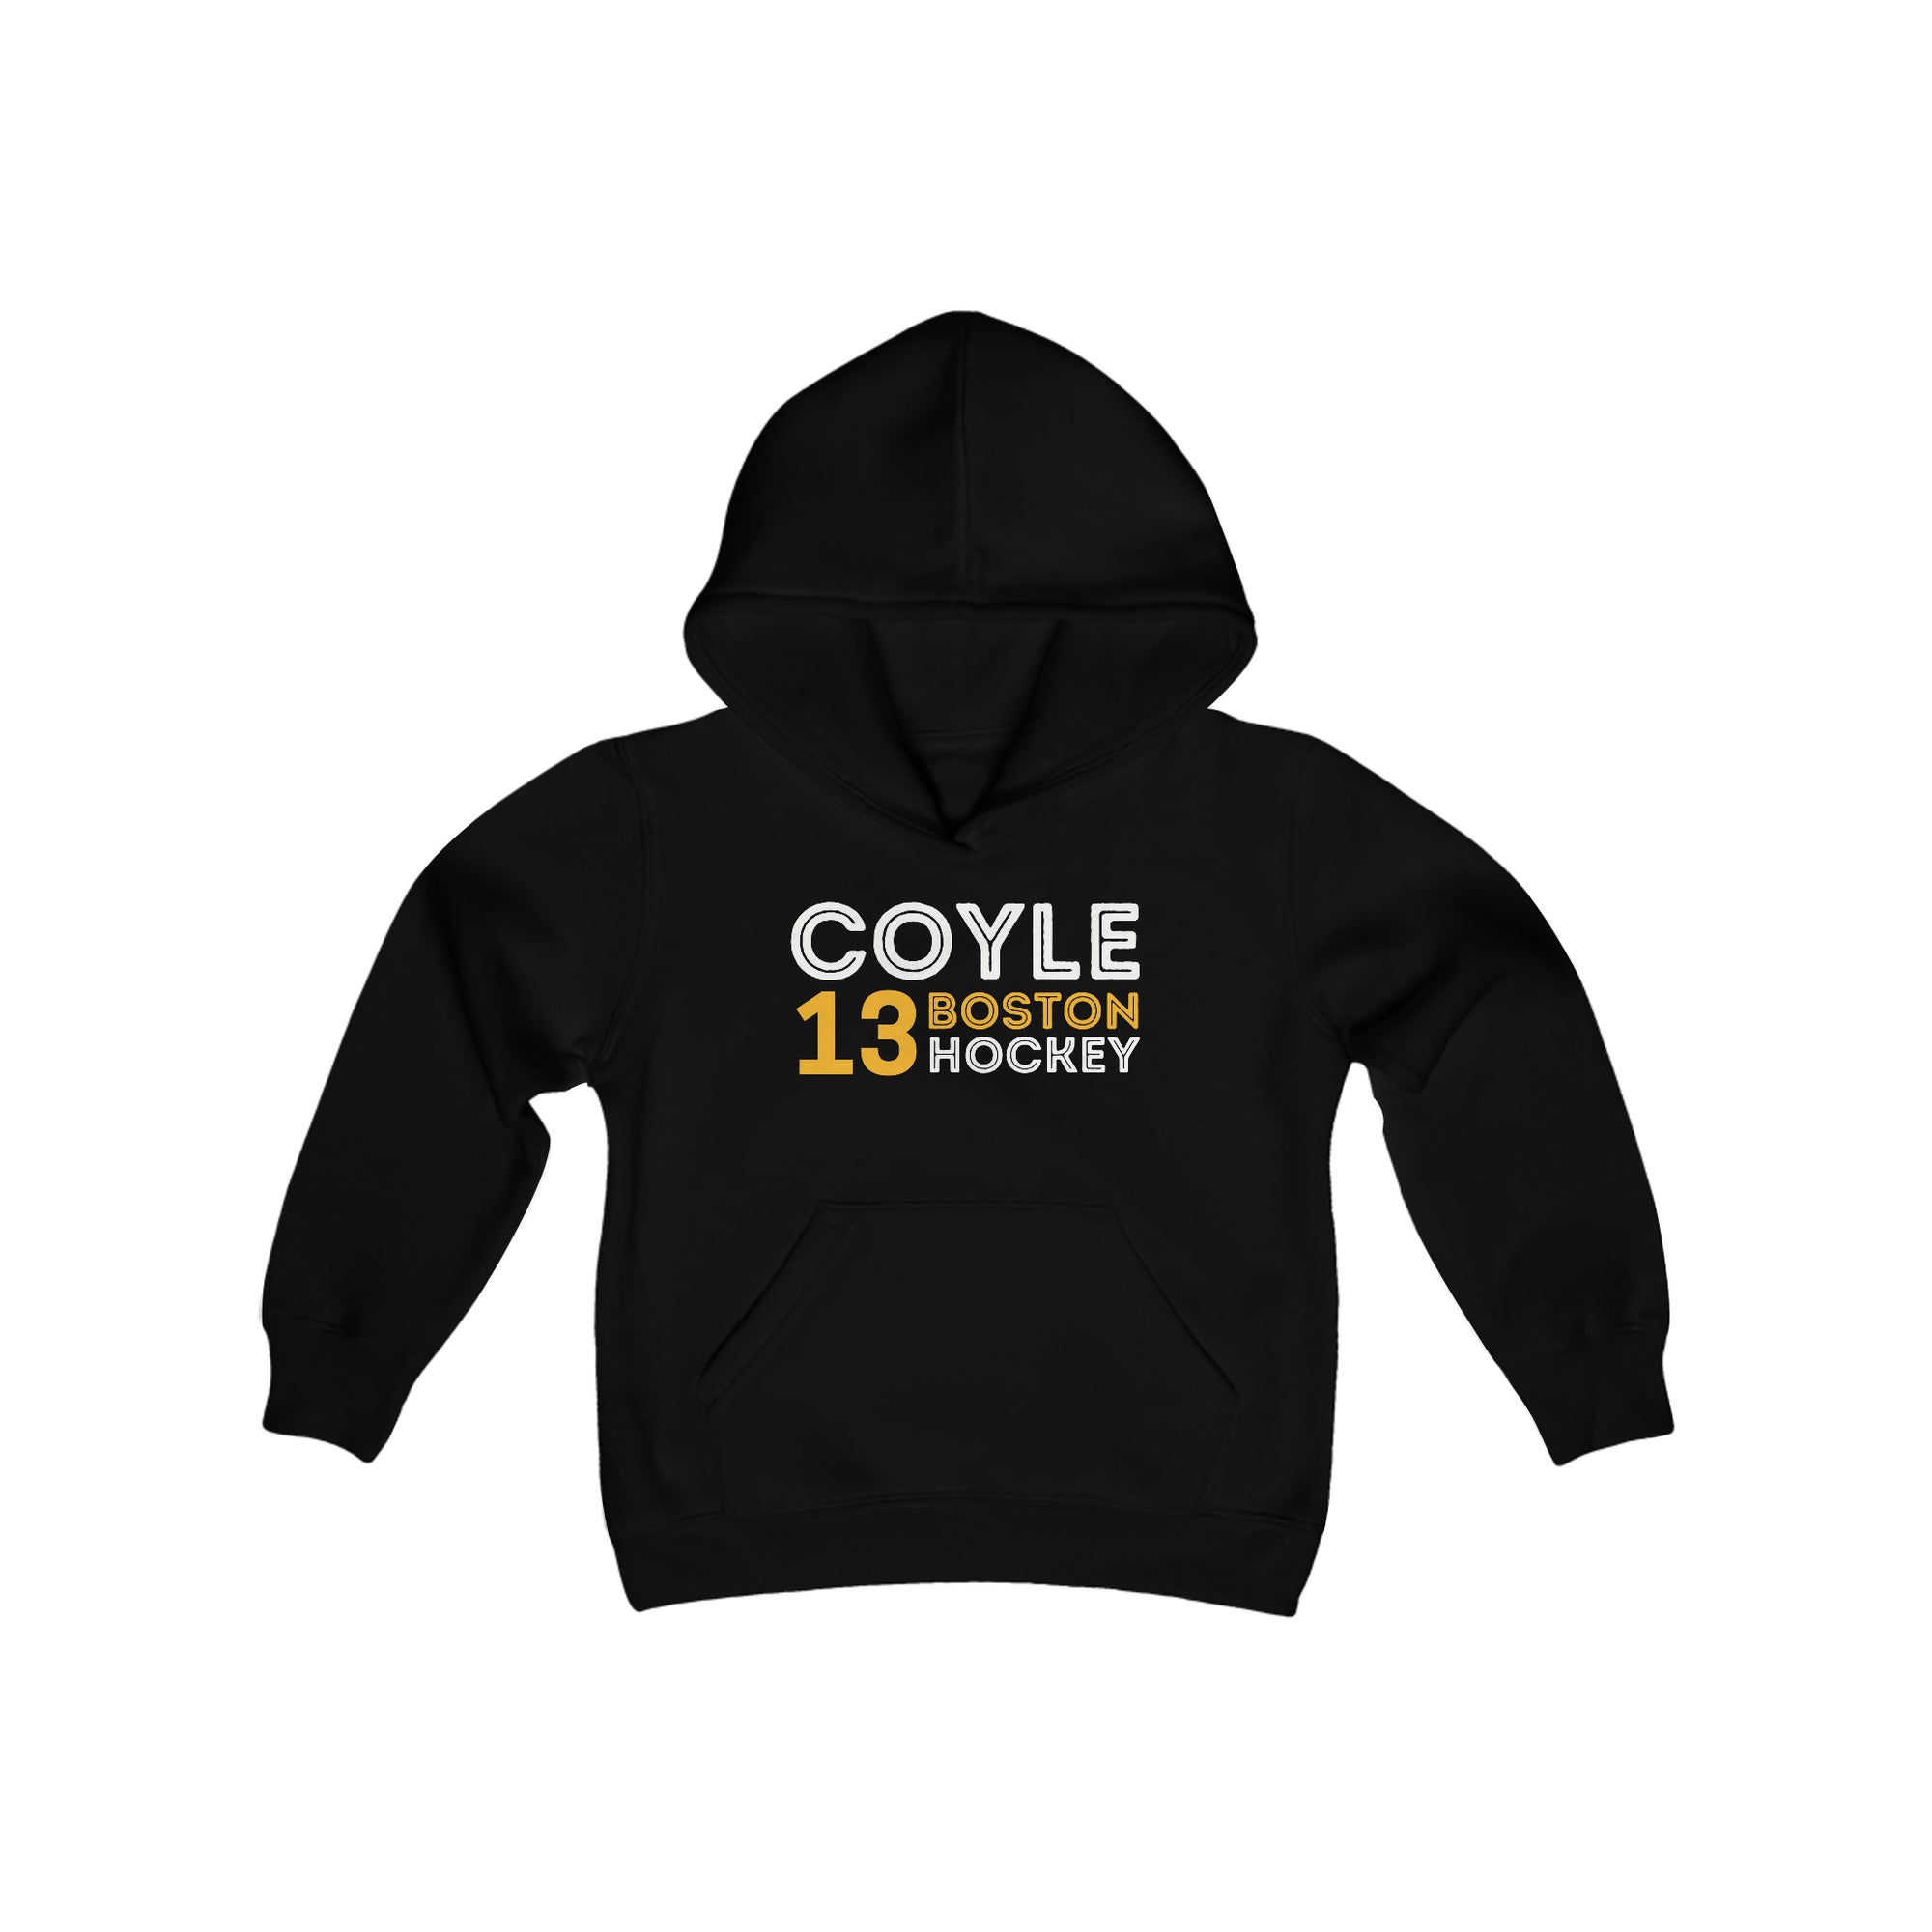 Coyle 13 Boston Hockey Grafitti Wall Design Youth Hooded Sweatshirt